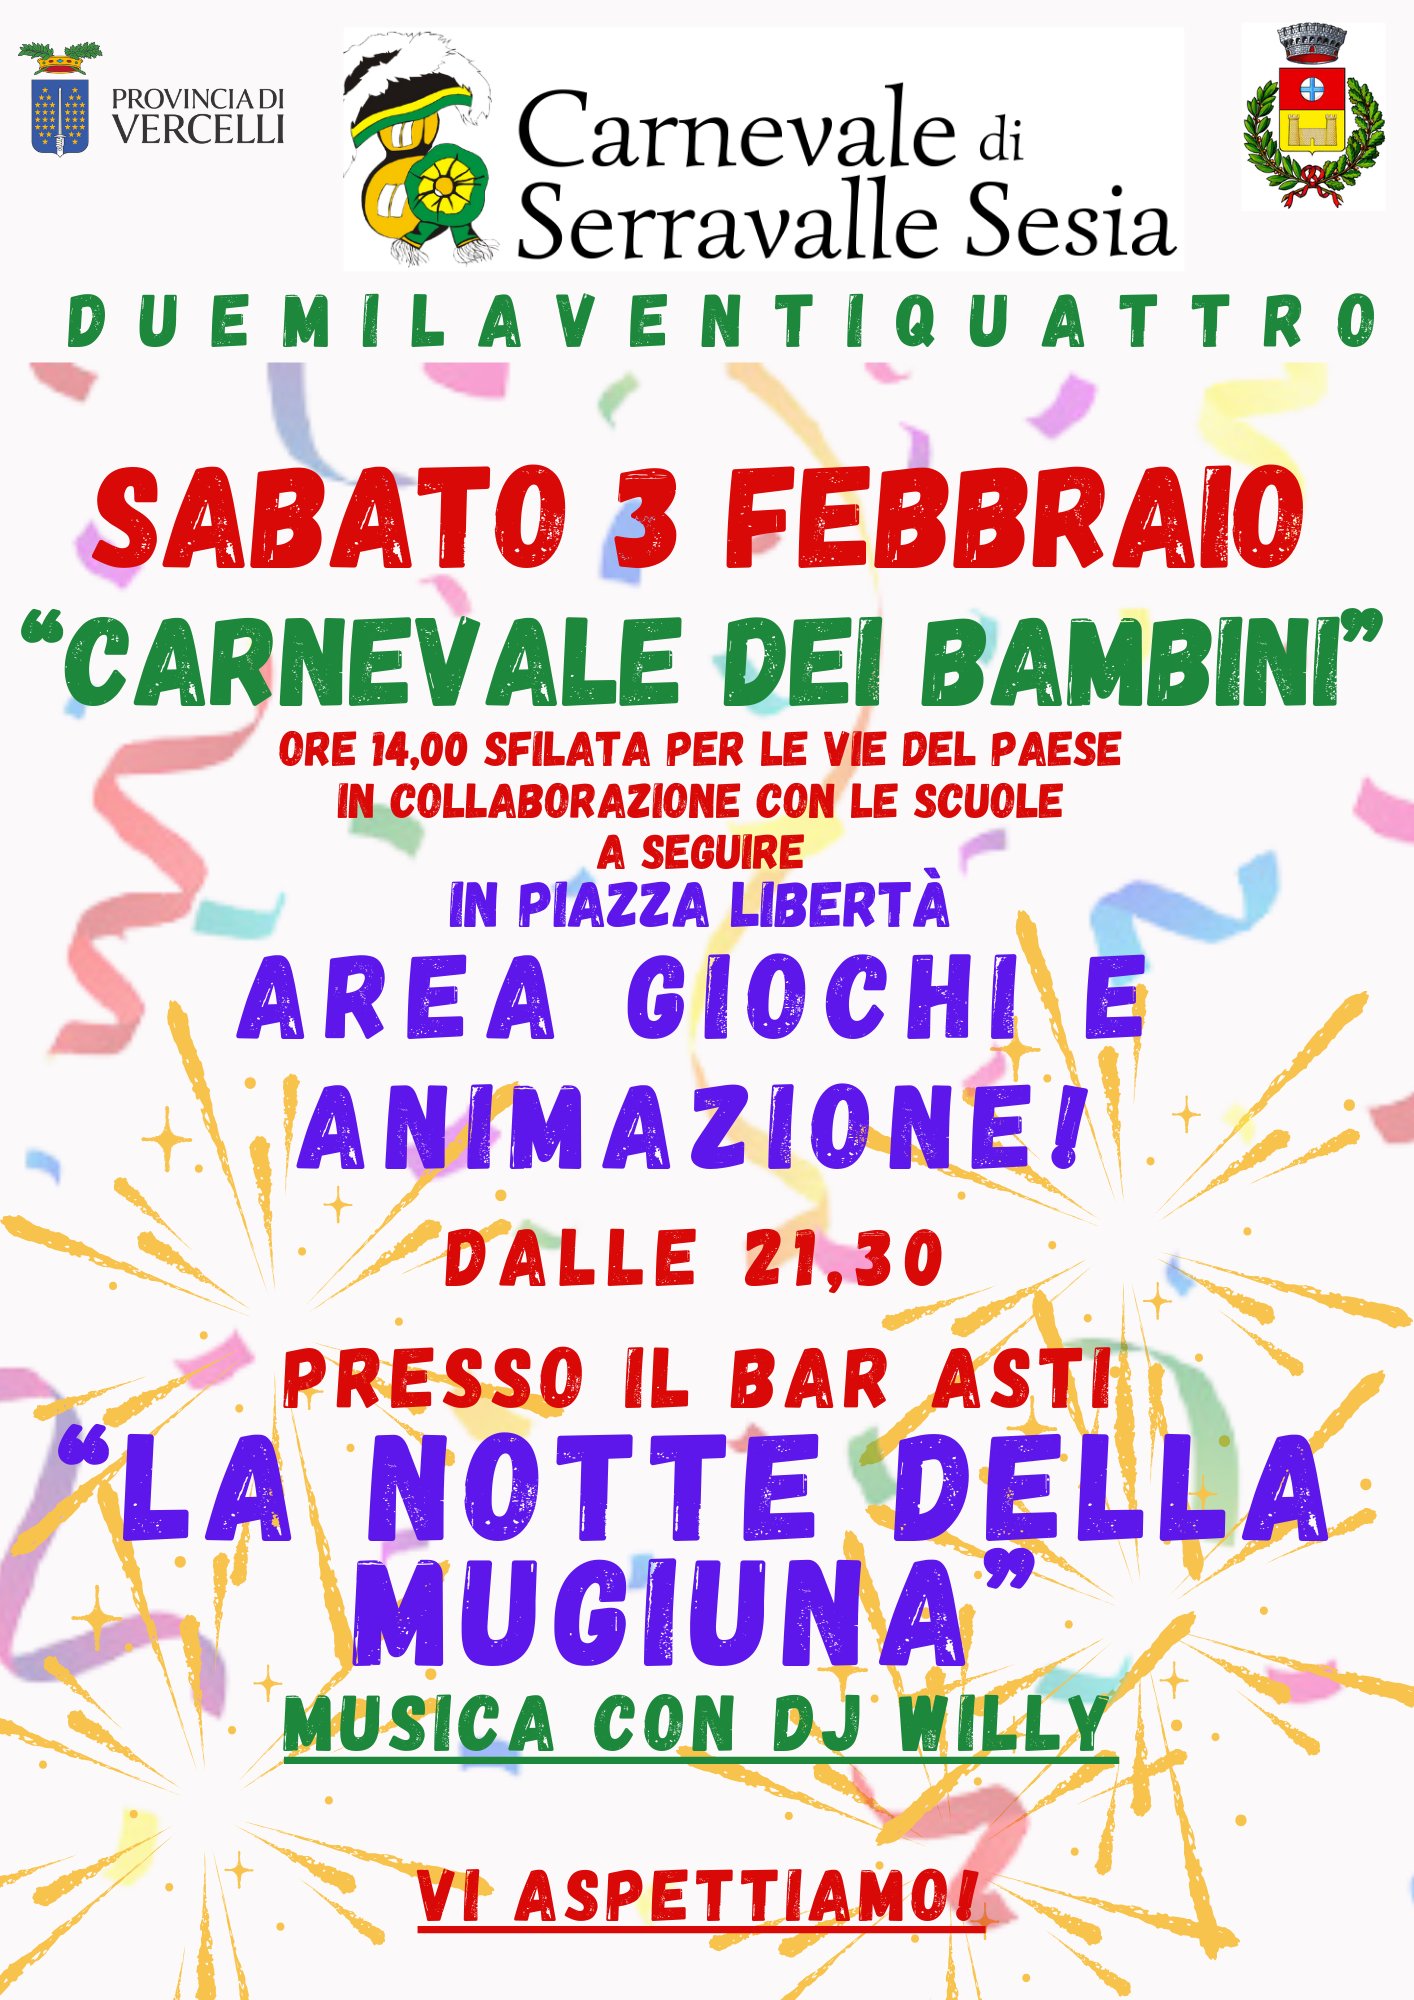 Locandina Carnevale Serravalle Sesia